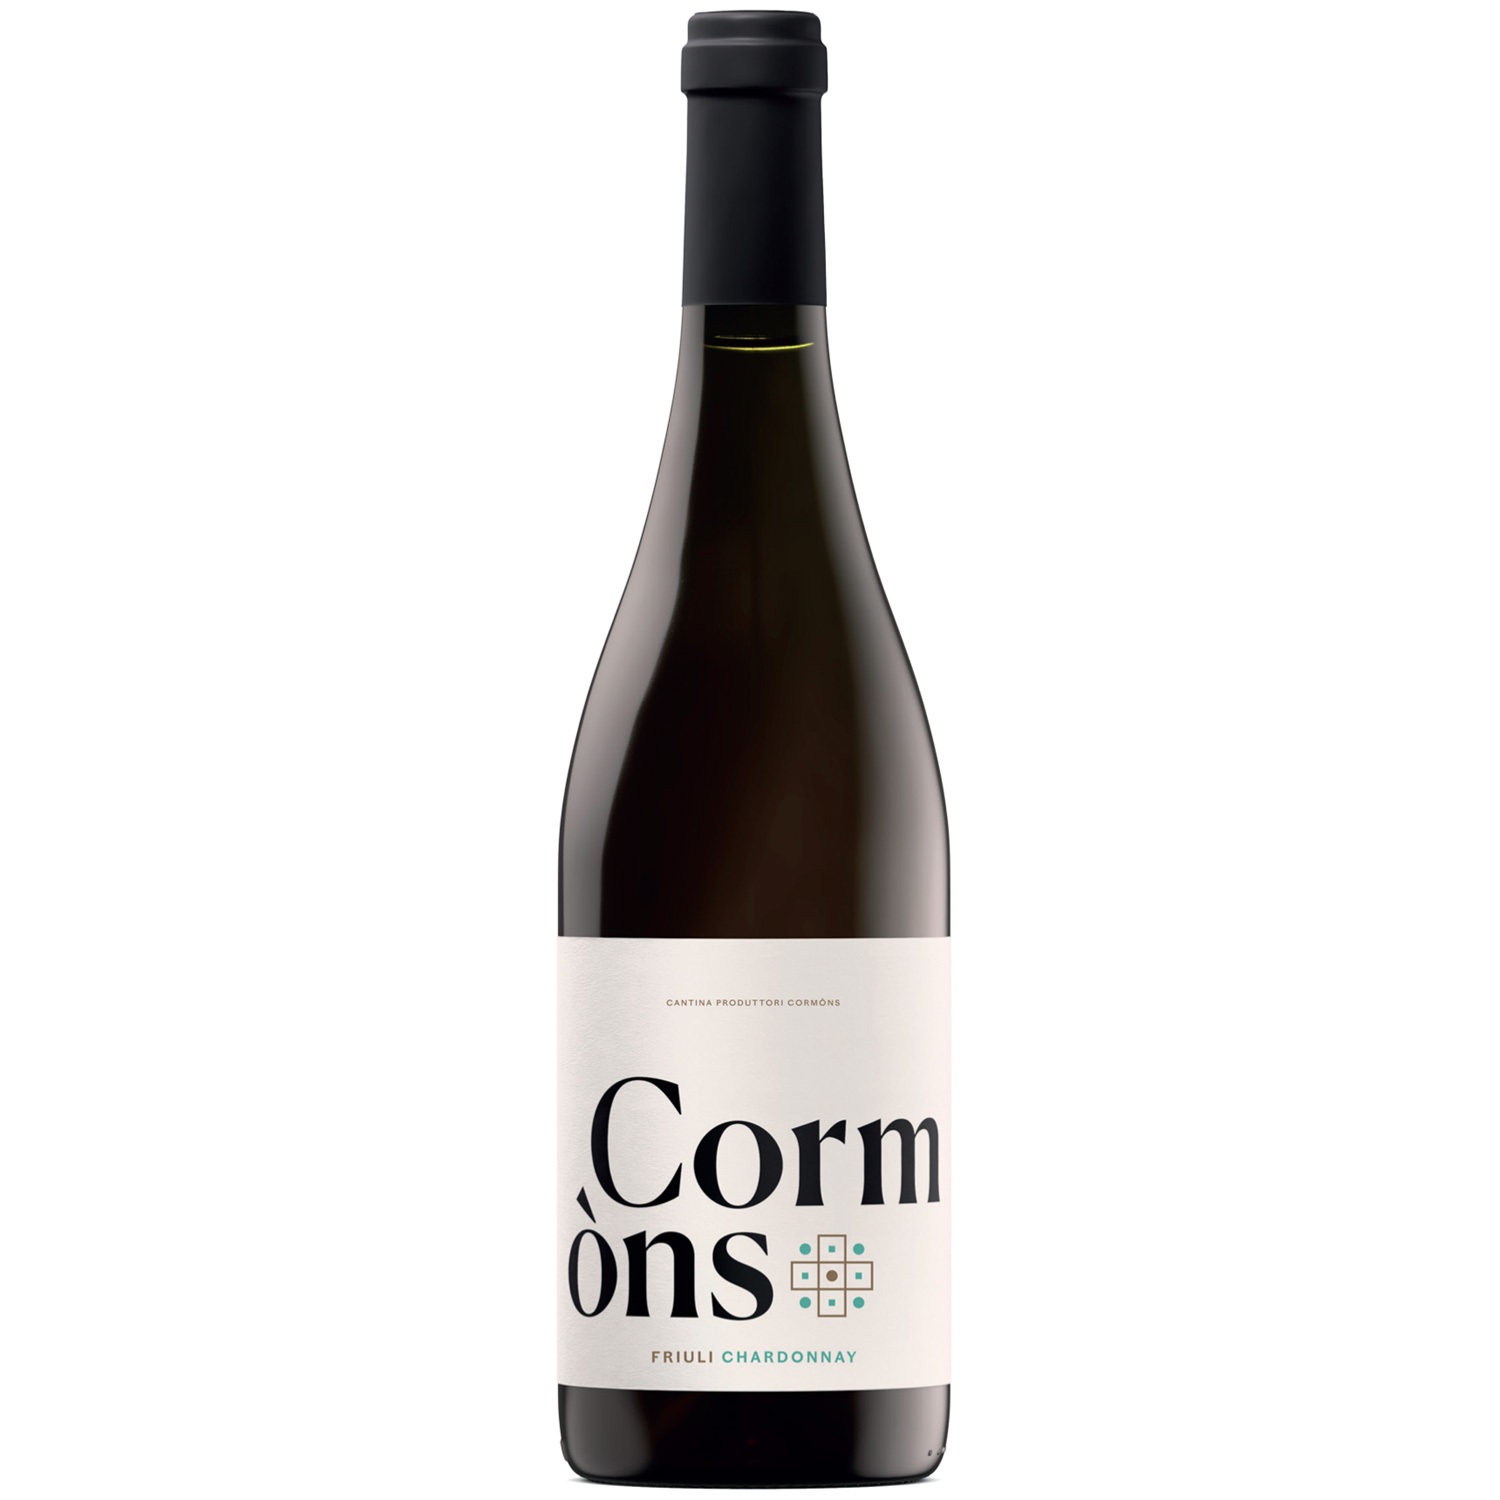 Cormons Friuli Chardonnay 2021 